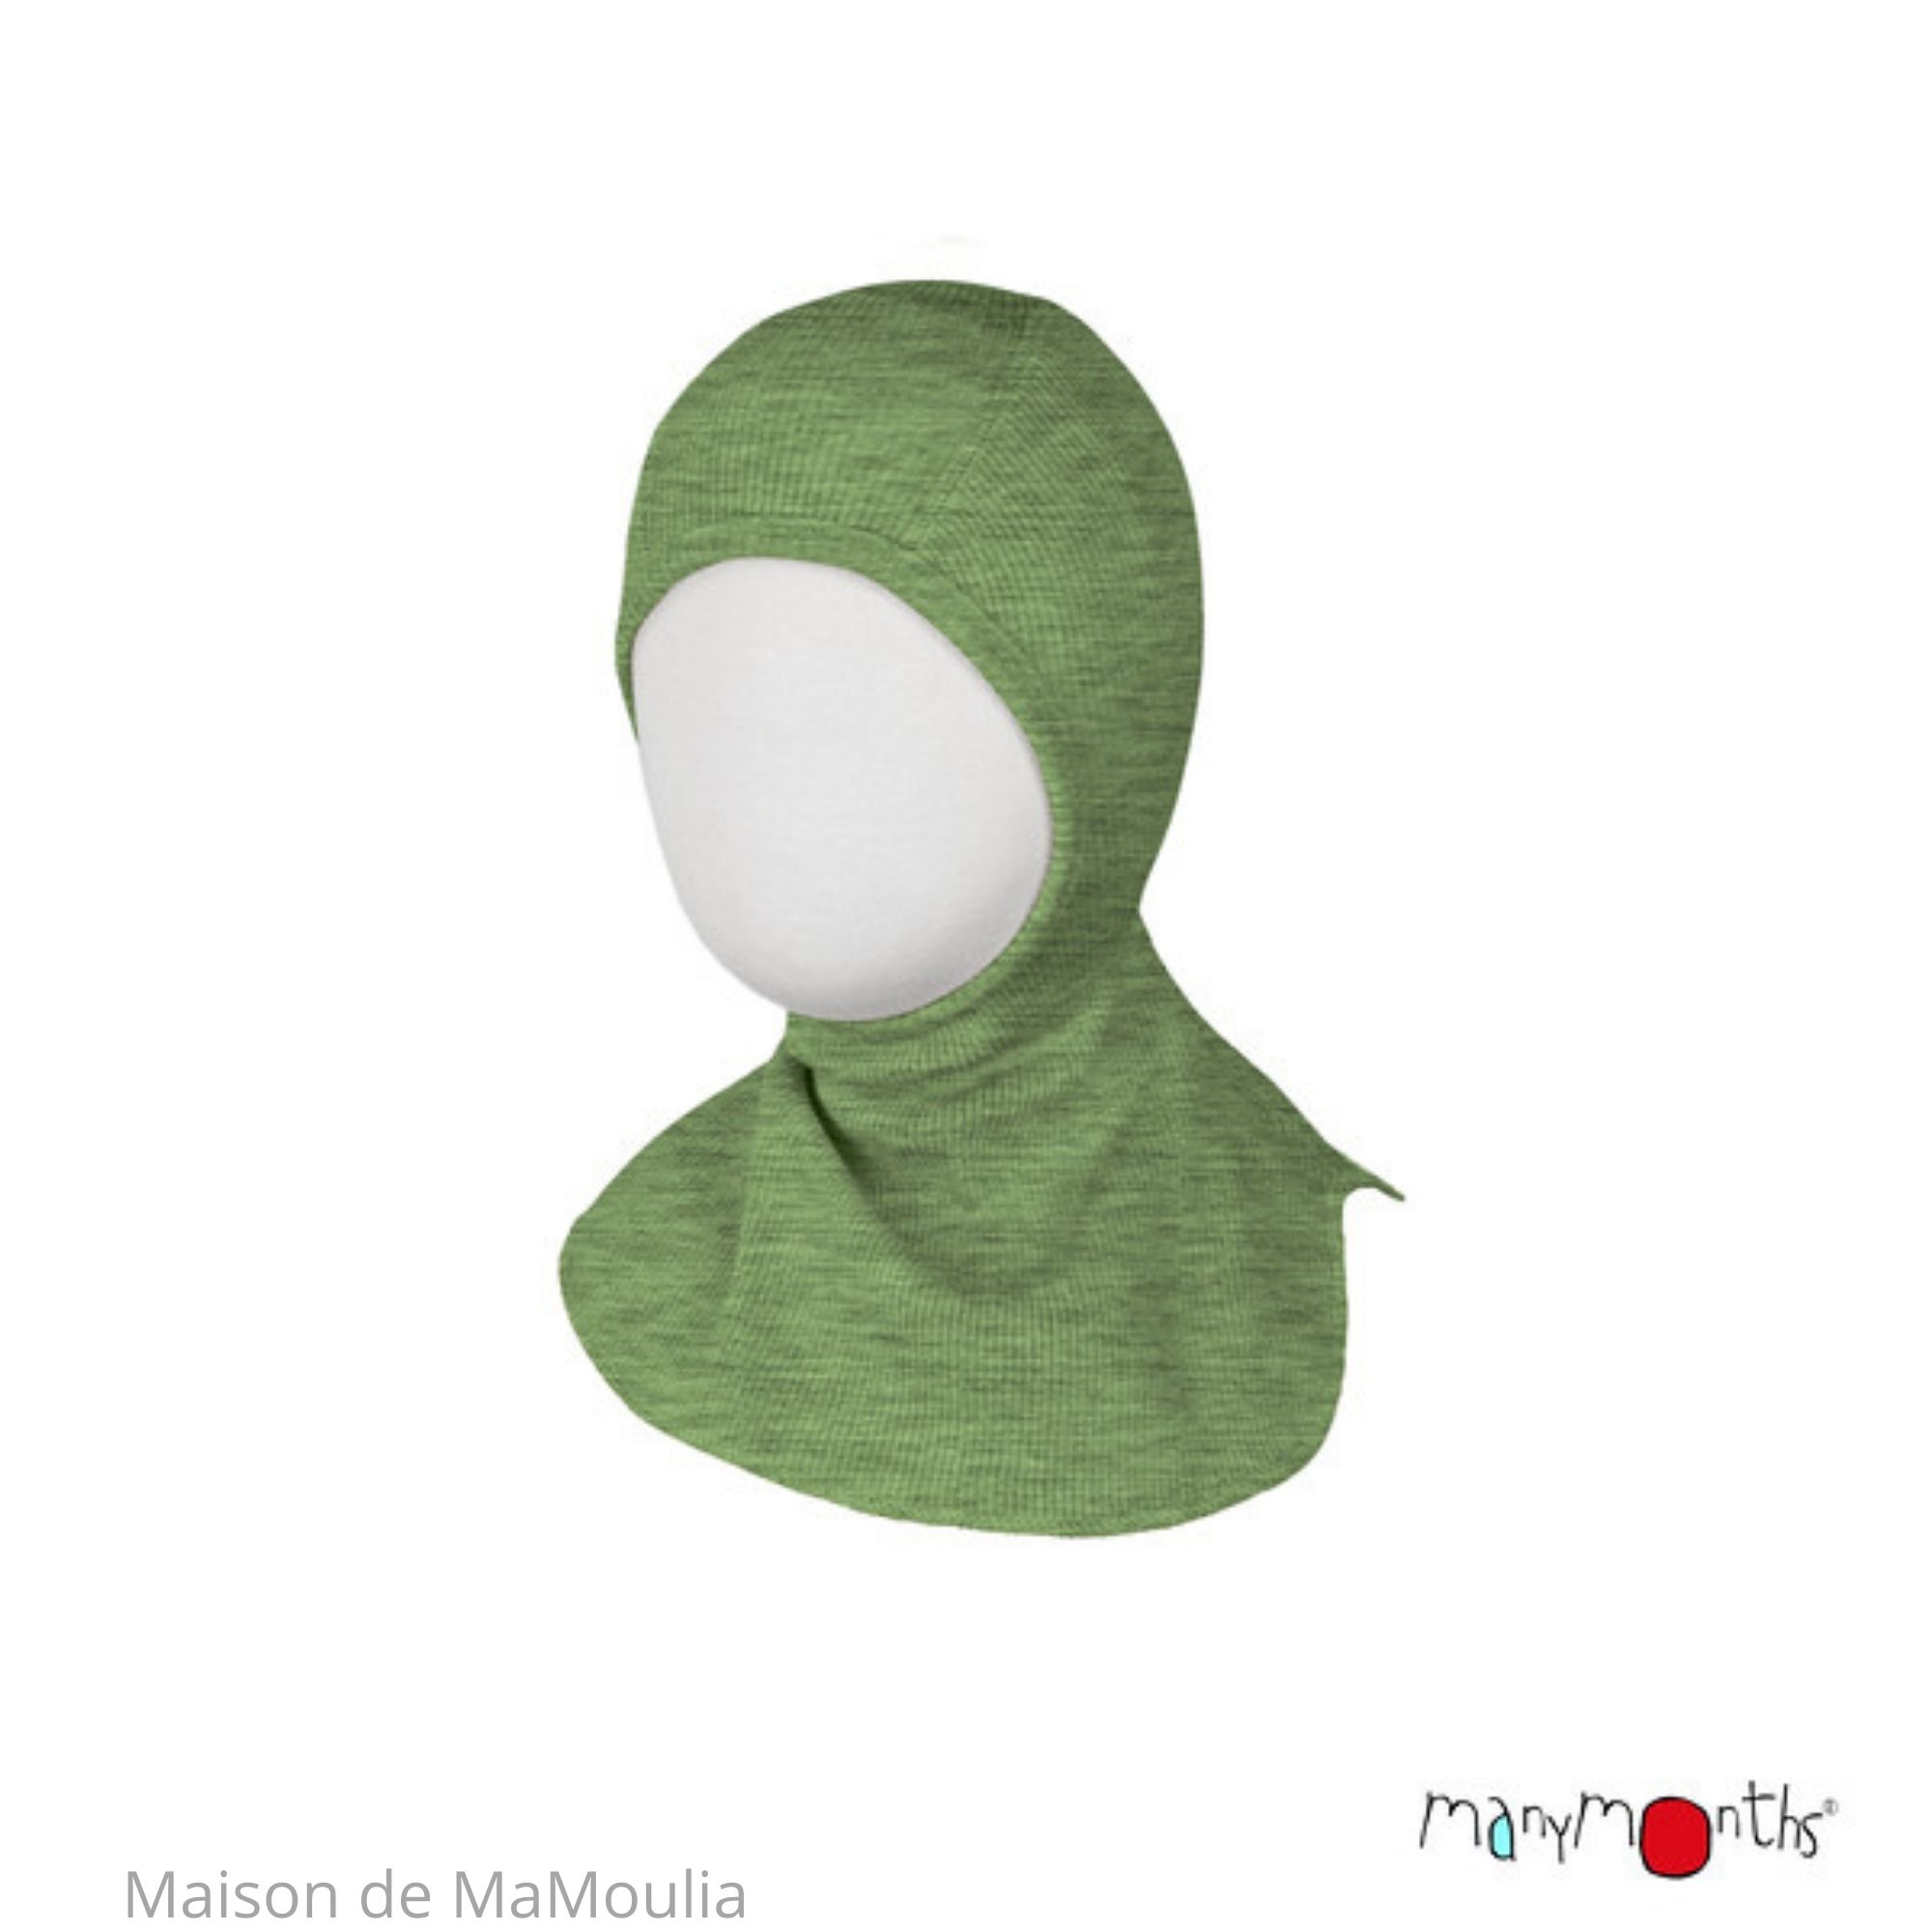 cagoule-bebe-enfant-evolutive-pure-laine-merinos-manymonths-maison-de-mamoulia-vert-jade-green